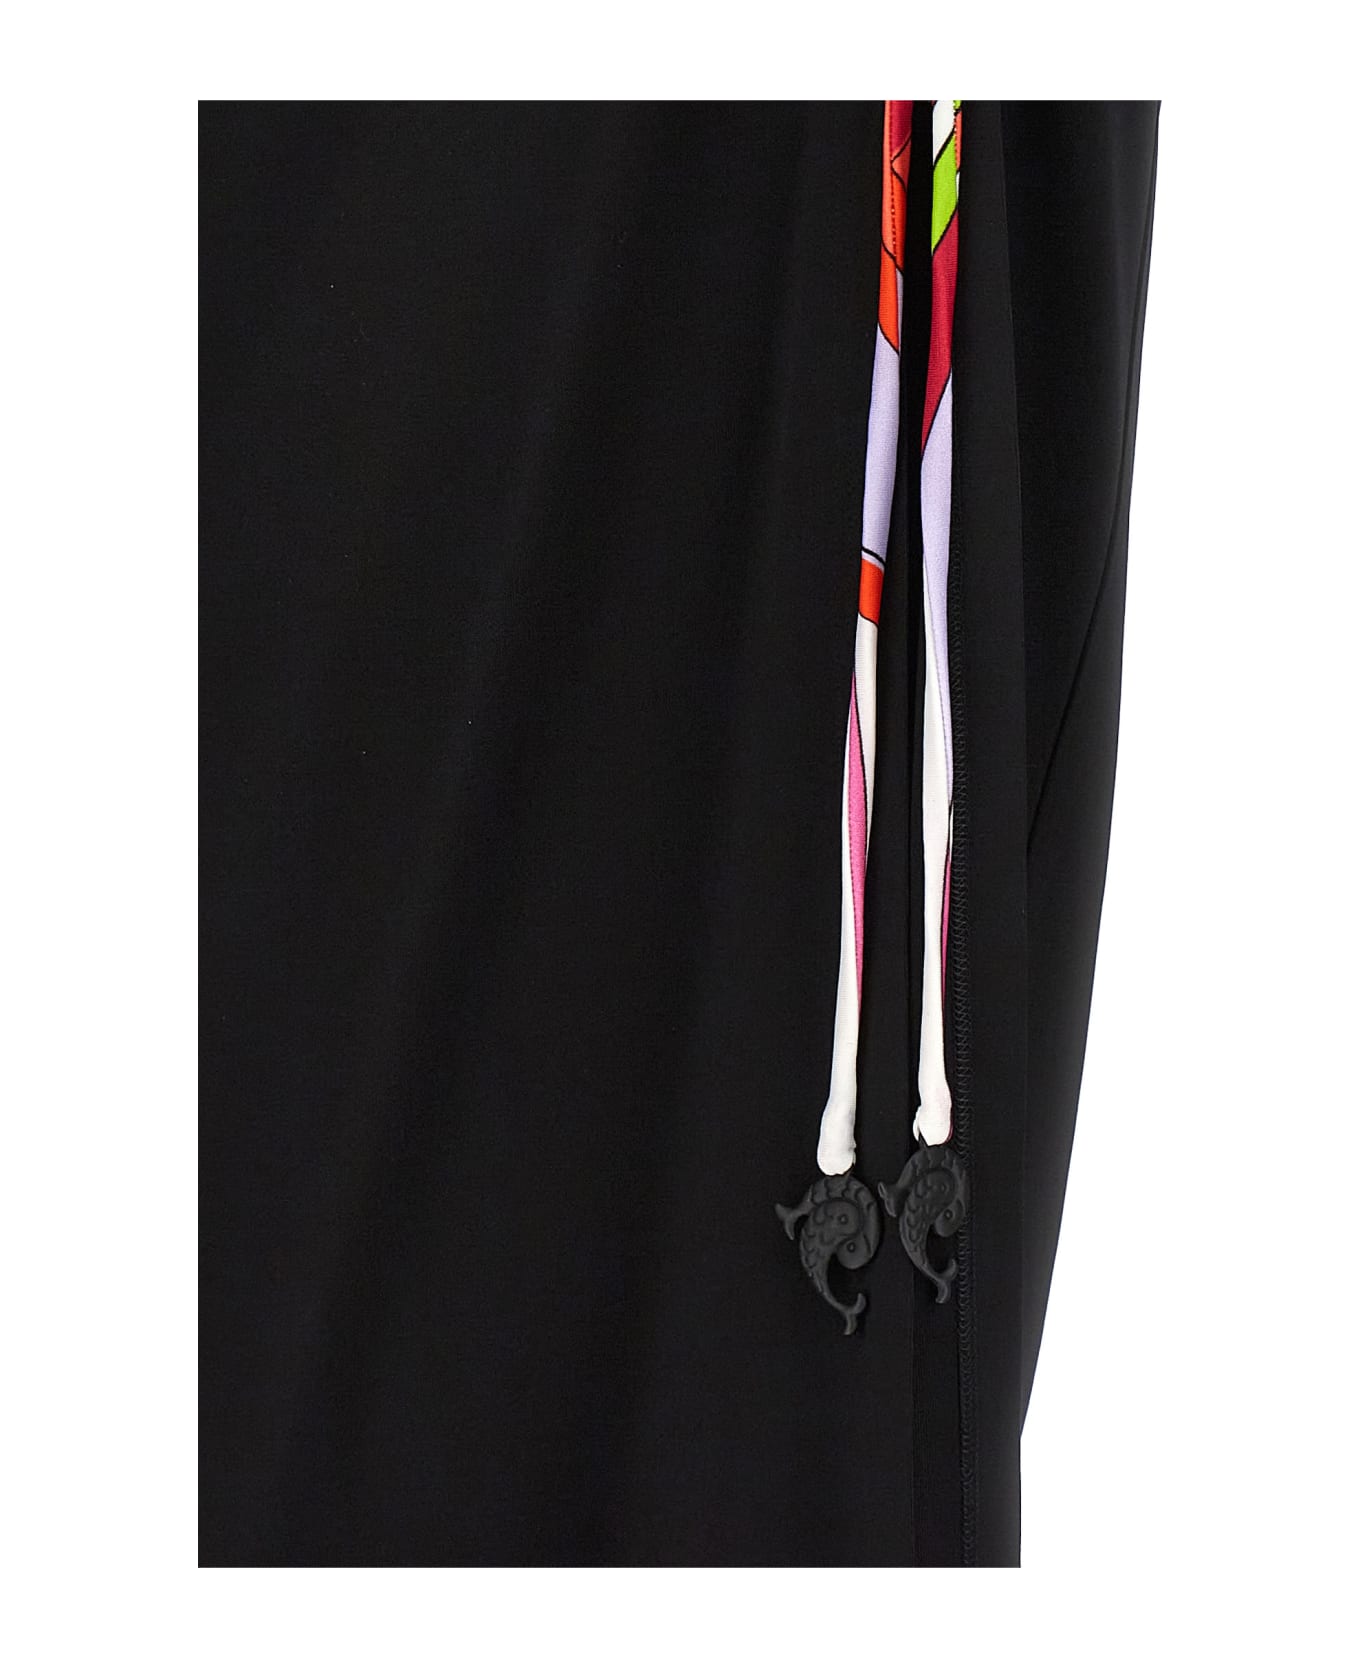 Pucci Gathered Longuette Skirt - Black  